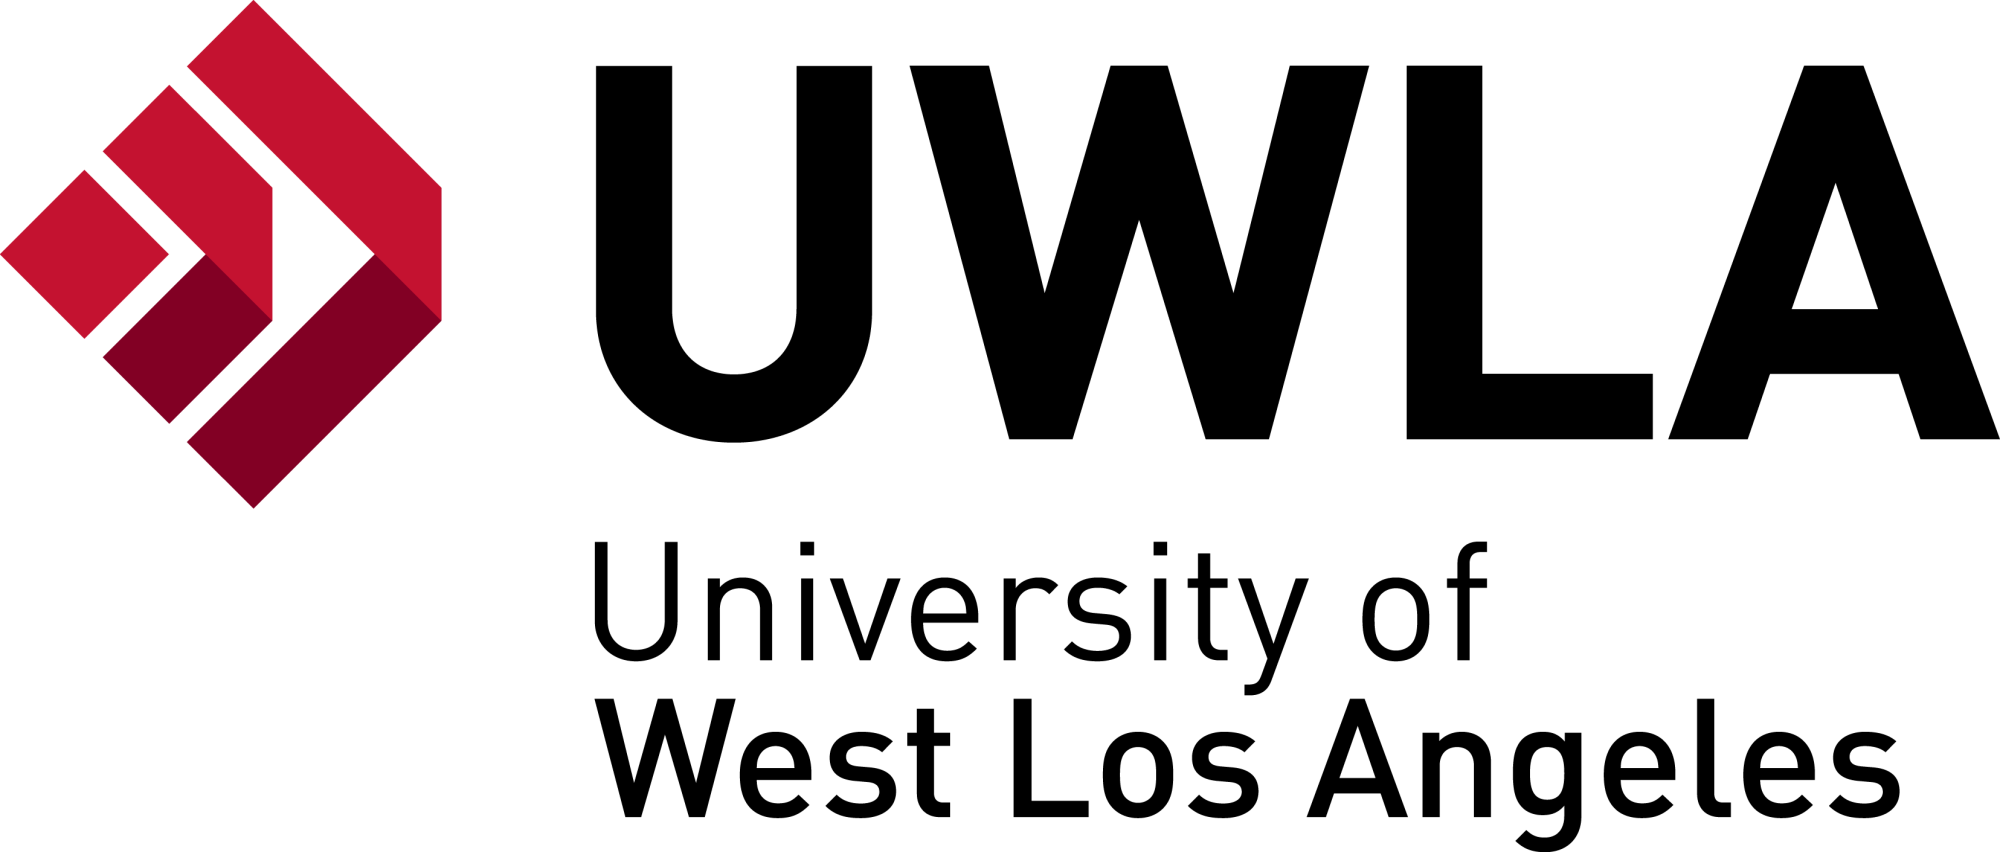 UWLA logo